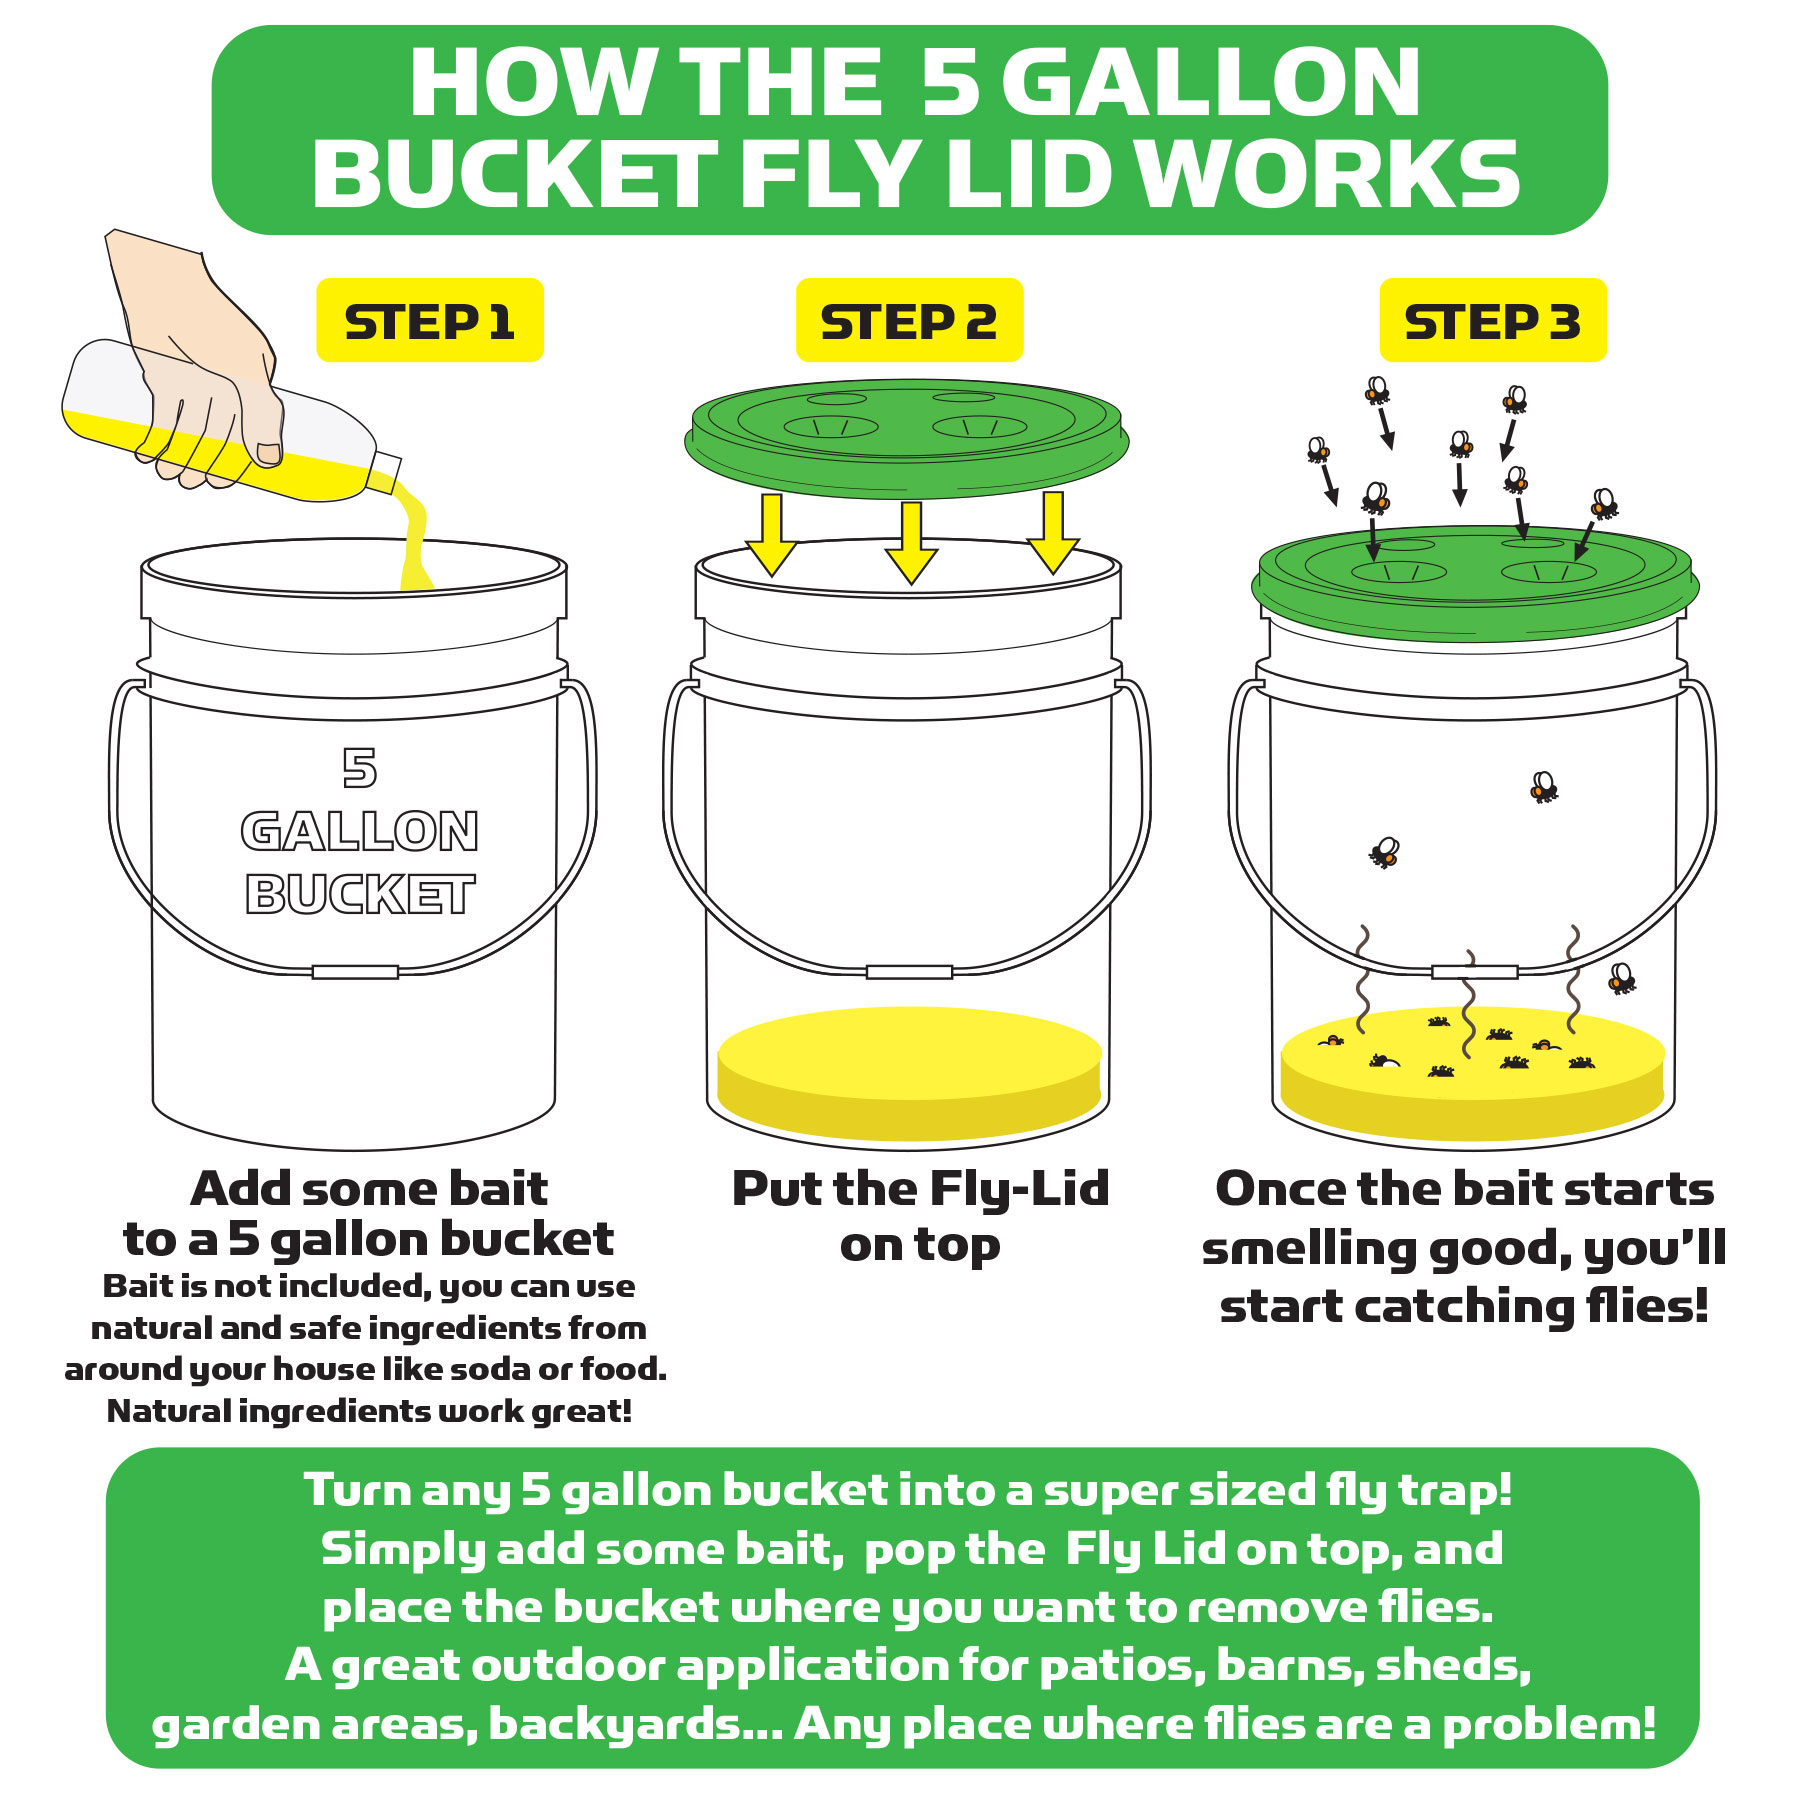 5 Gallon Bucket Fly Lid - Turn any 5 gallon bucket into a Fly Trap - Billy  Bob